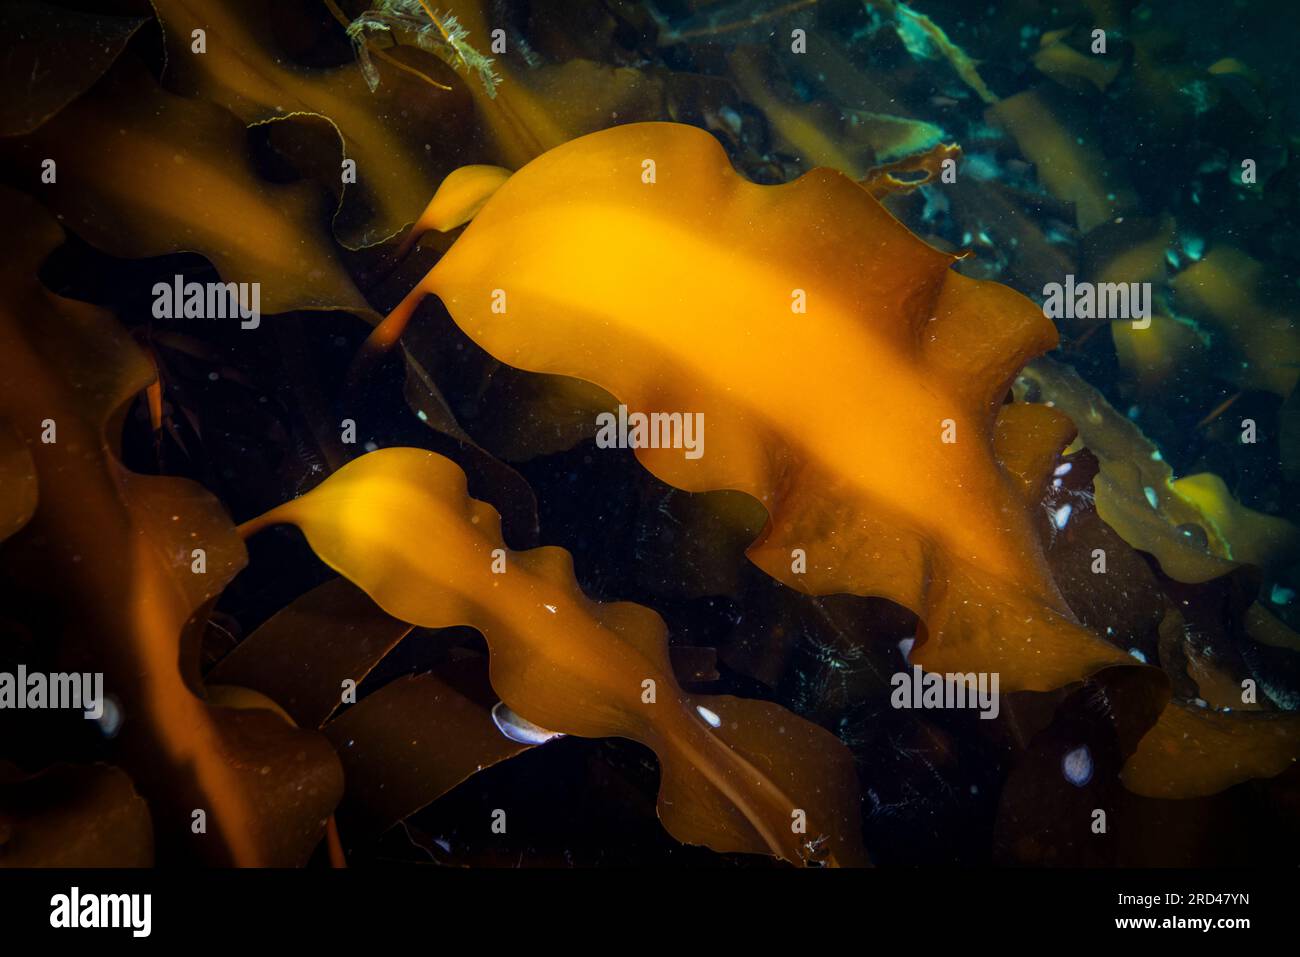 Hollow-Stemmed kelp sott'acqua nel fiume San Lorenzo in Canada Foto Stock